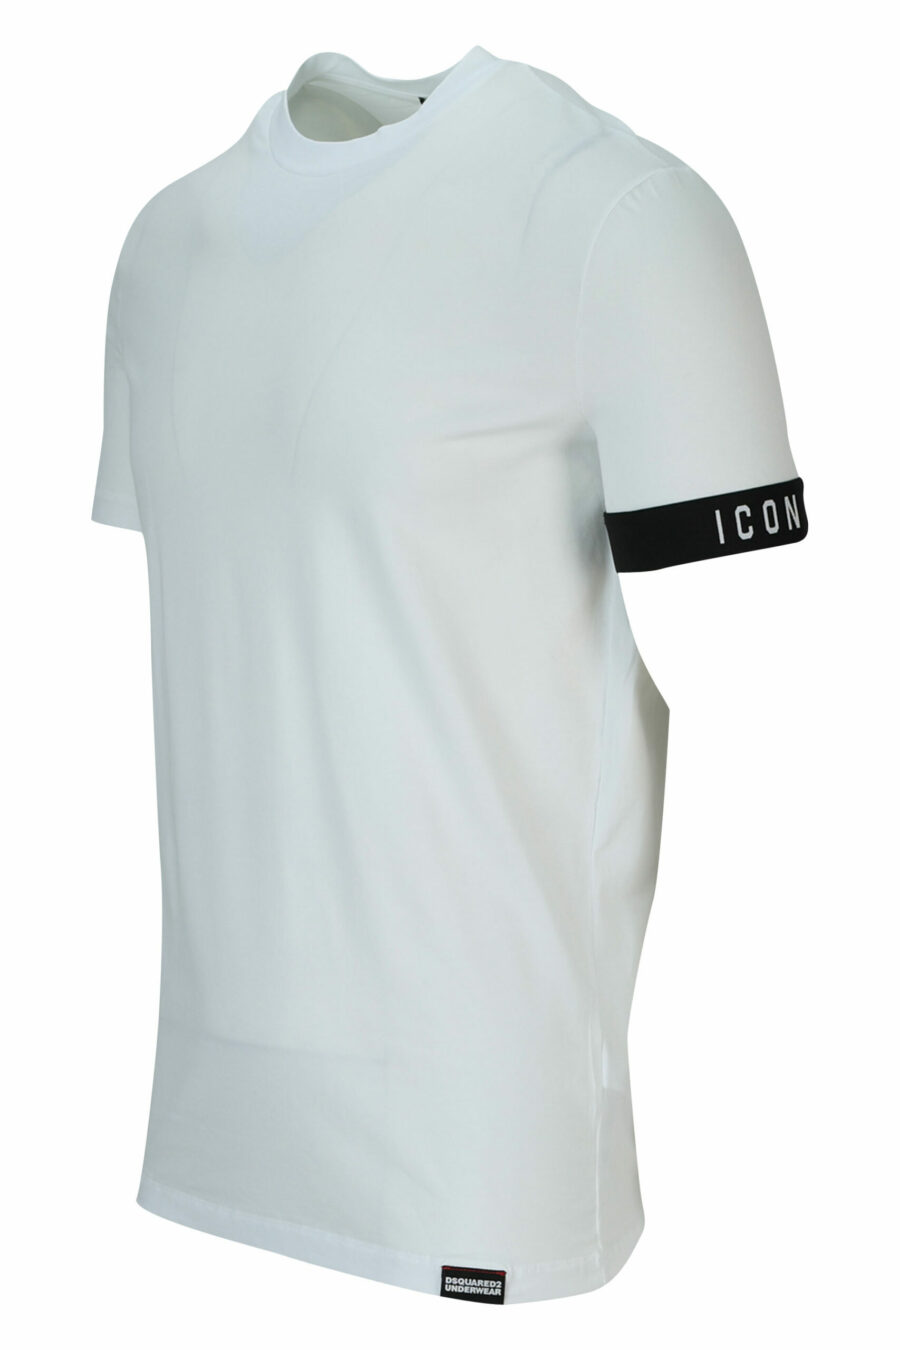 Camiseta blanca con logo negro - 8032674767493 1 scaled